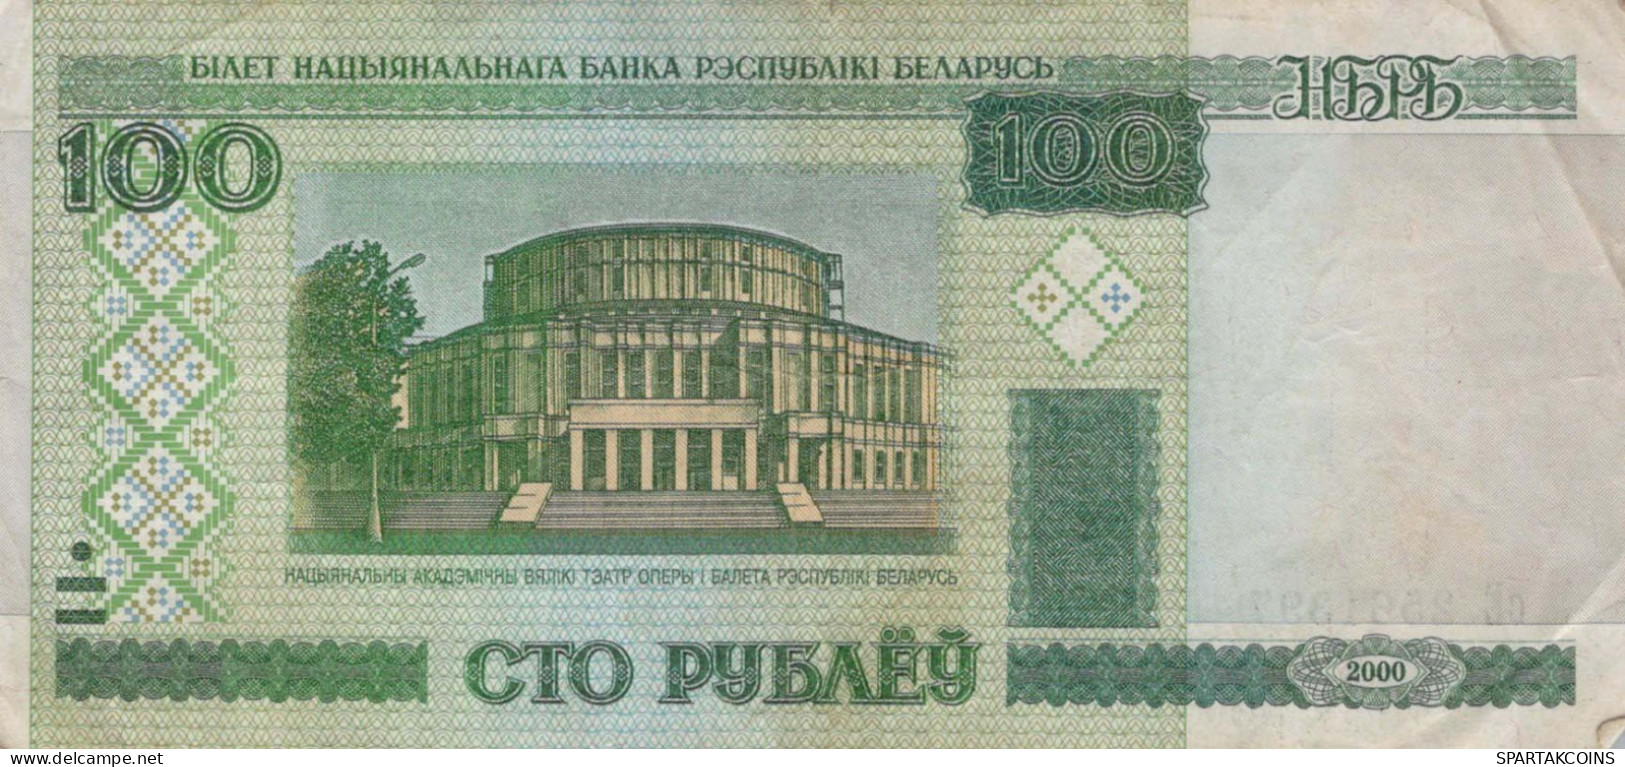 100 RUBLES 2000 BELARUS Papiergeld Banknote #PK608 - [11] Local Banknote Issues